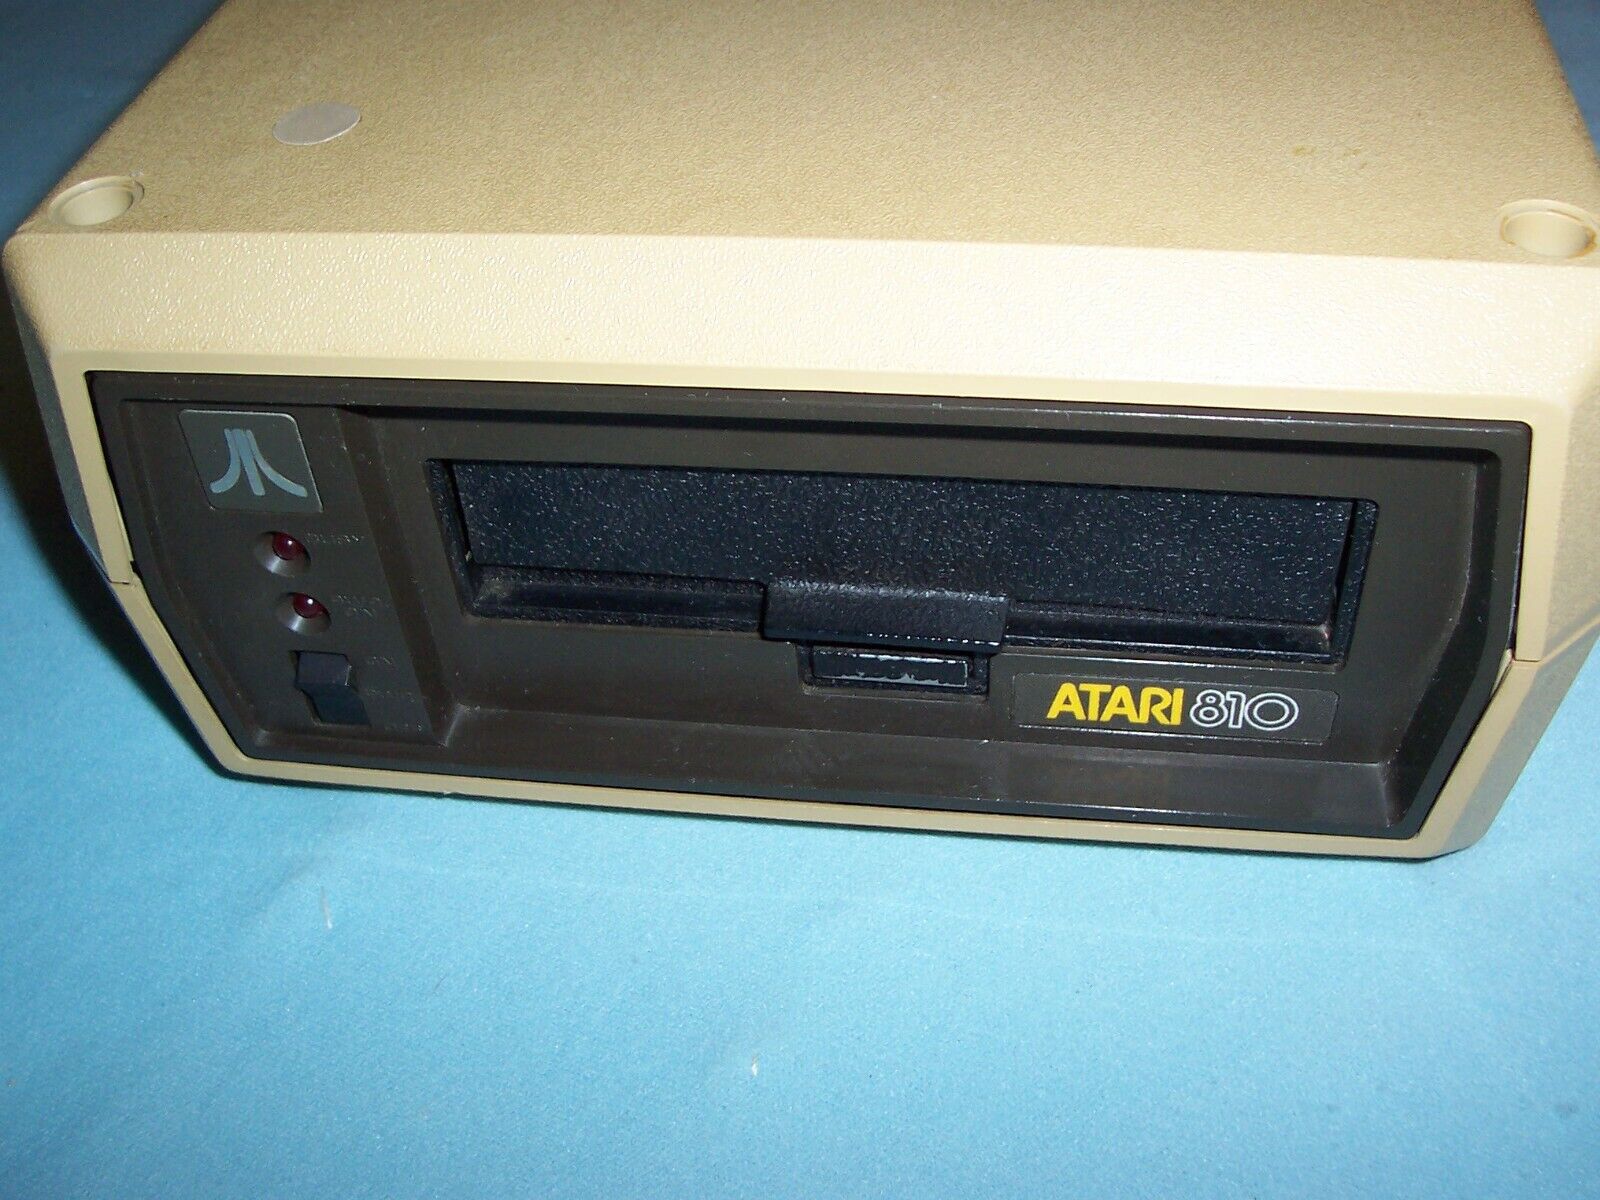 Atari 810 Disk Drive Untested Modified 